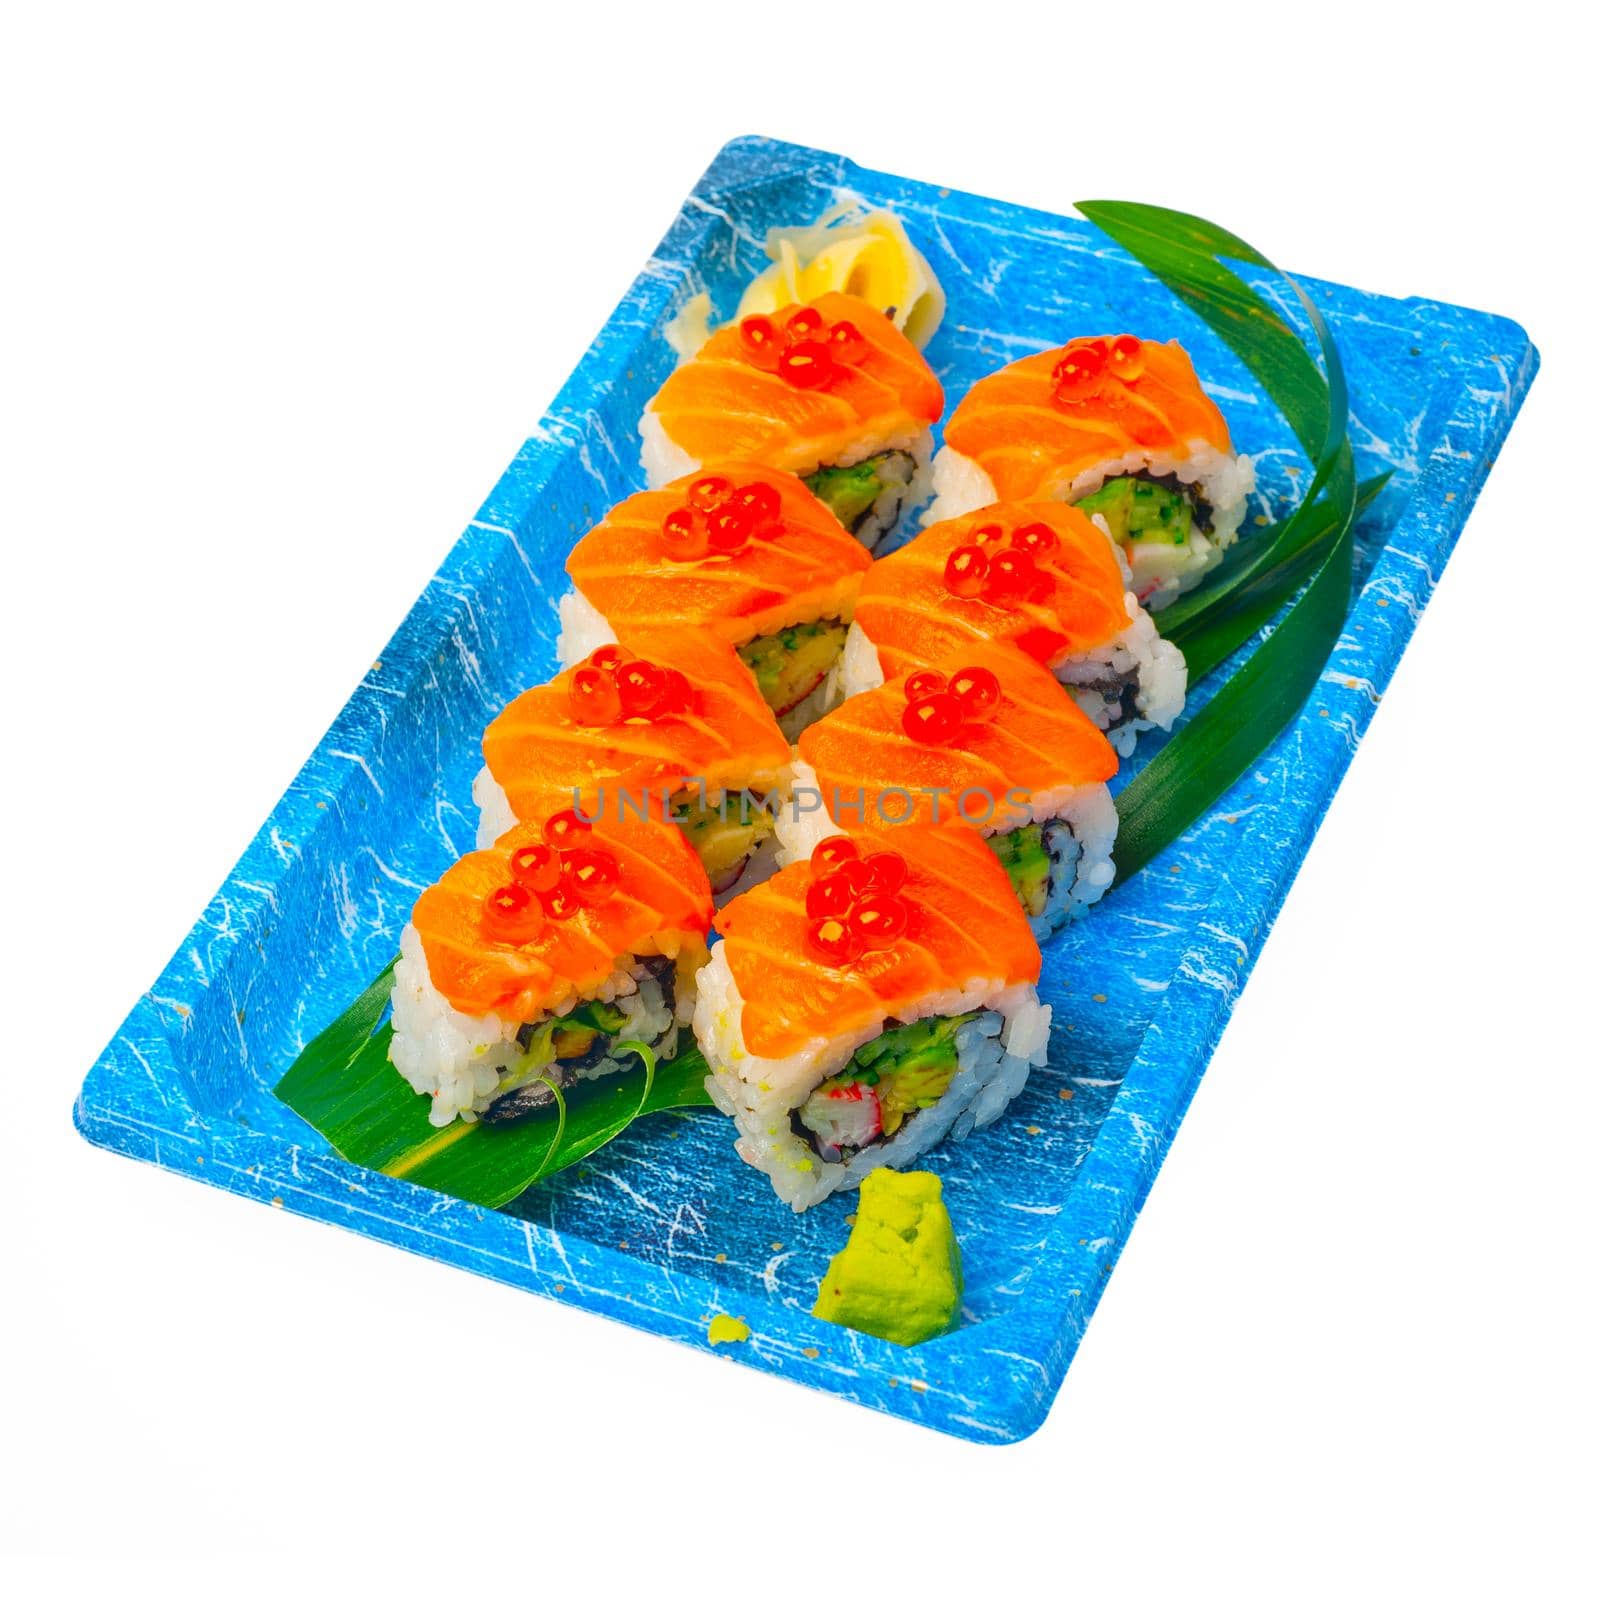 take away sushi express on plastic tray  by keko64